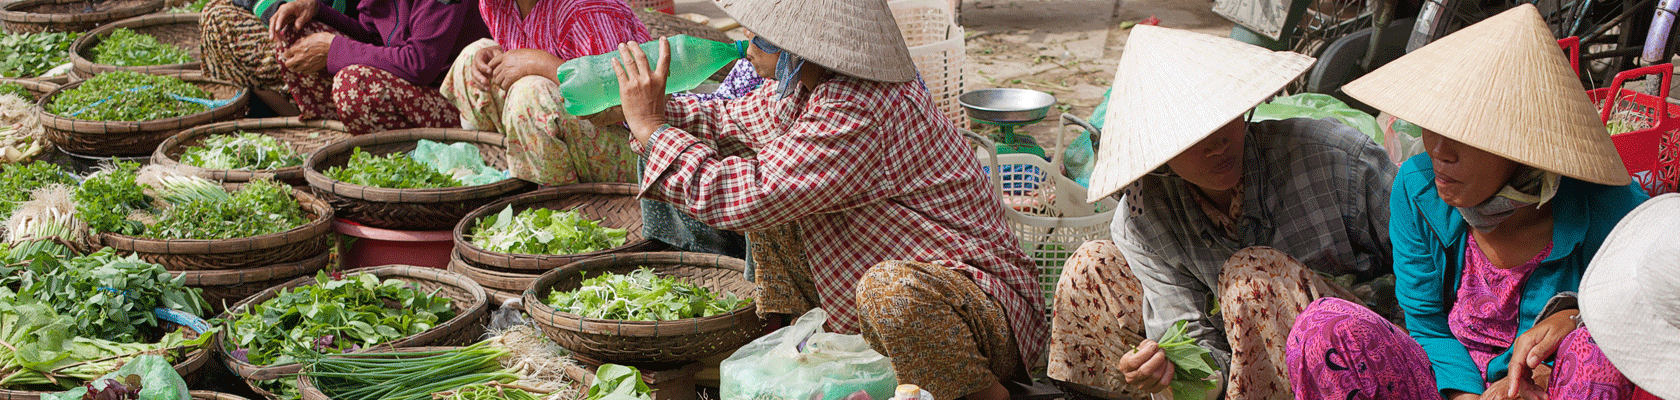 Lokale markt in Vietnam